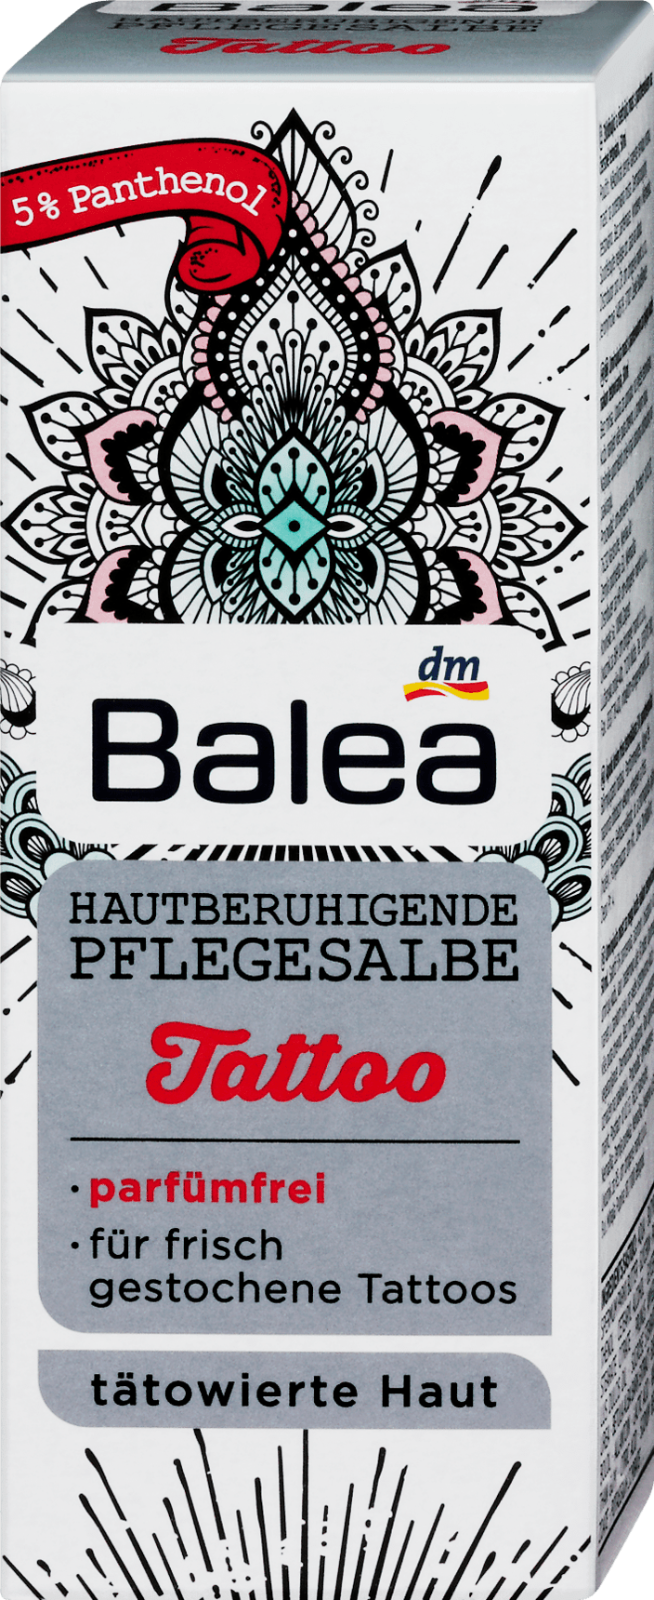 Genuine Balea tattoo treatment ointment almond oil and shea butter Vegan 50 ml - $15.50